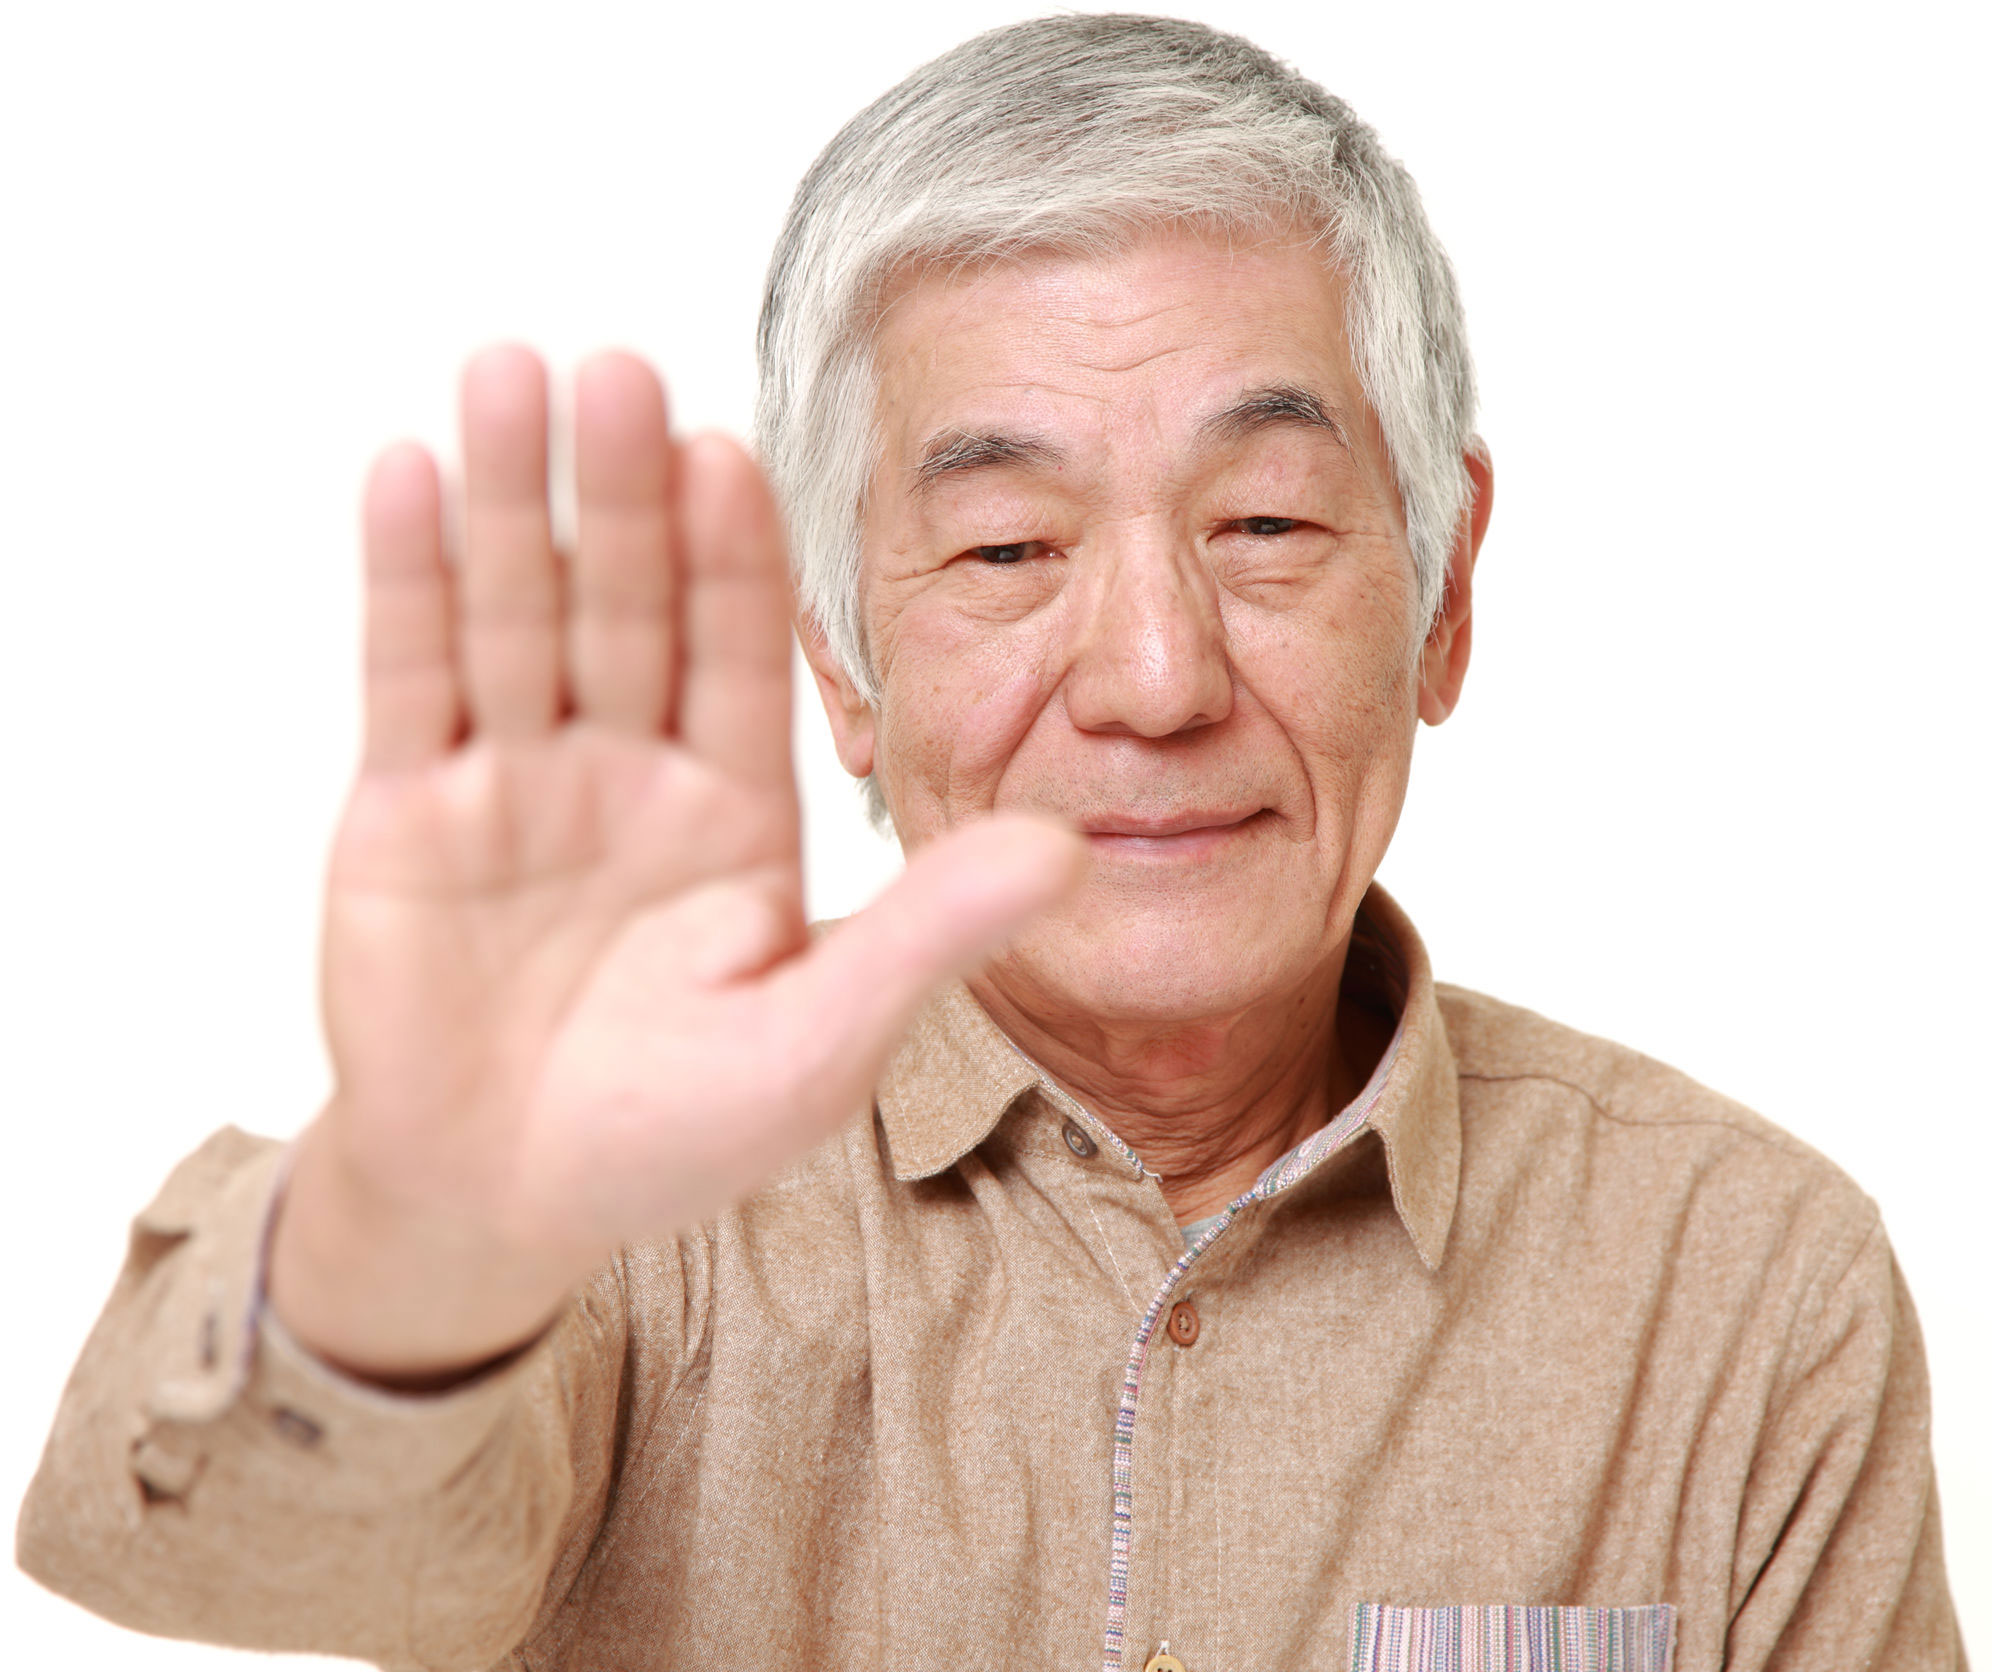 Elderly gentleman raising hand